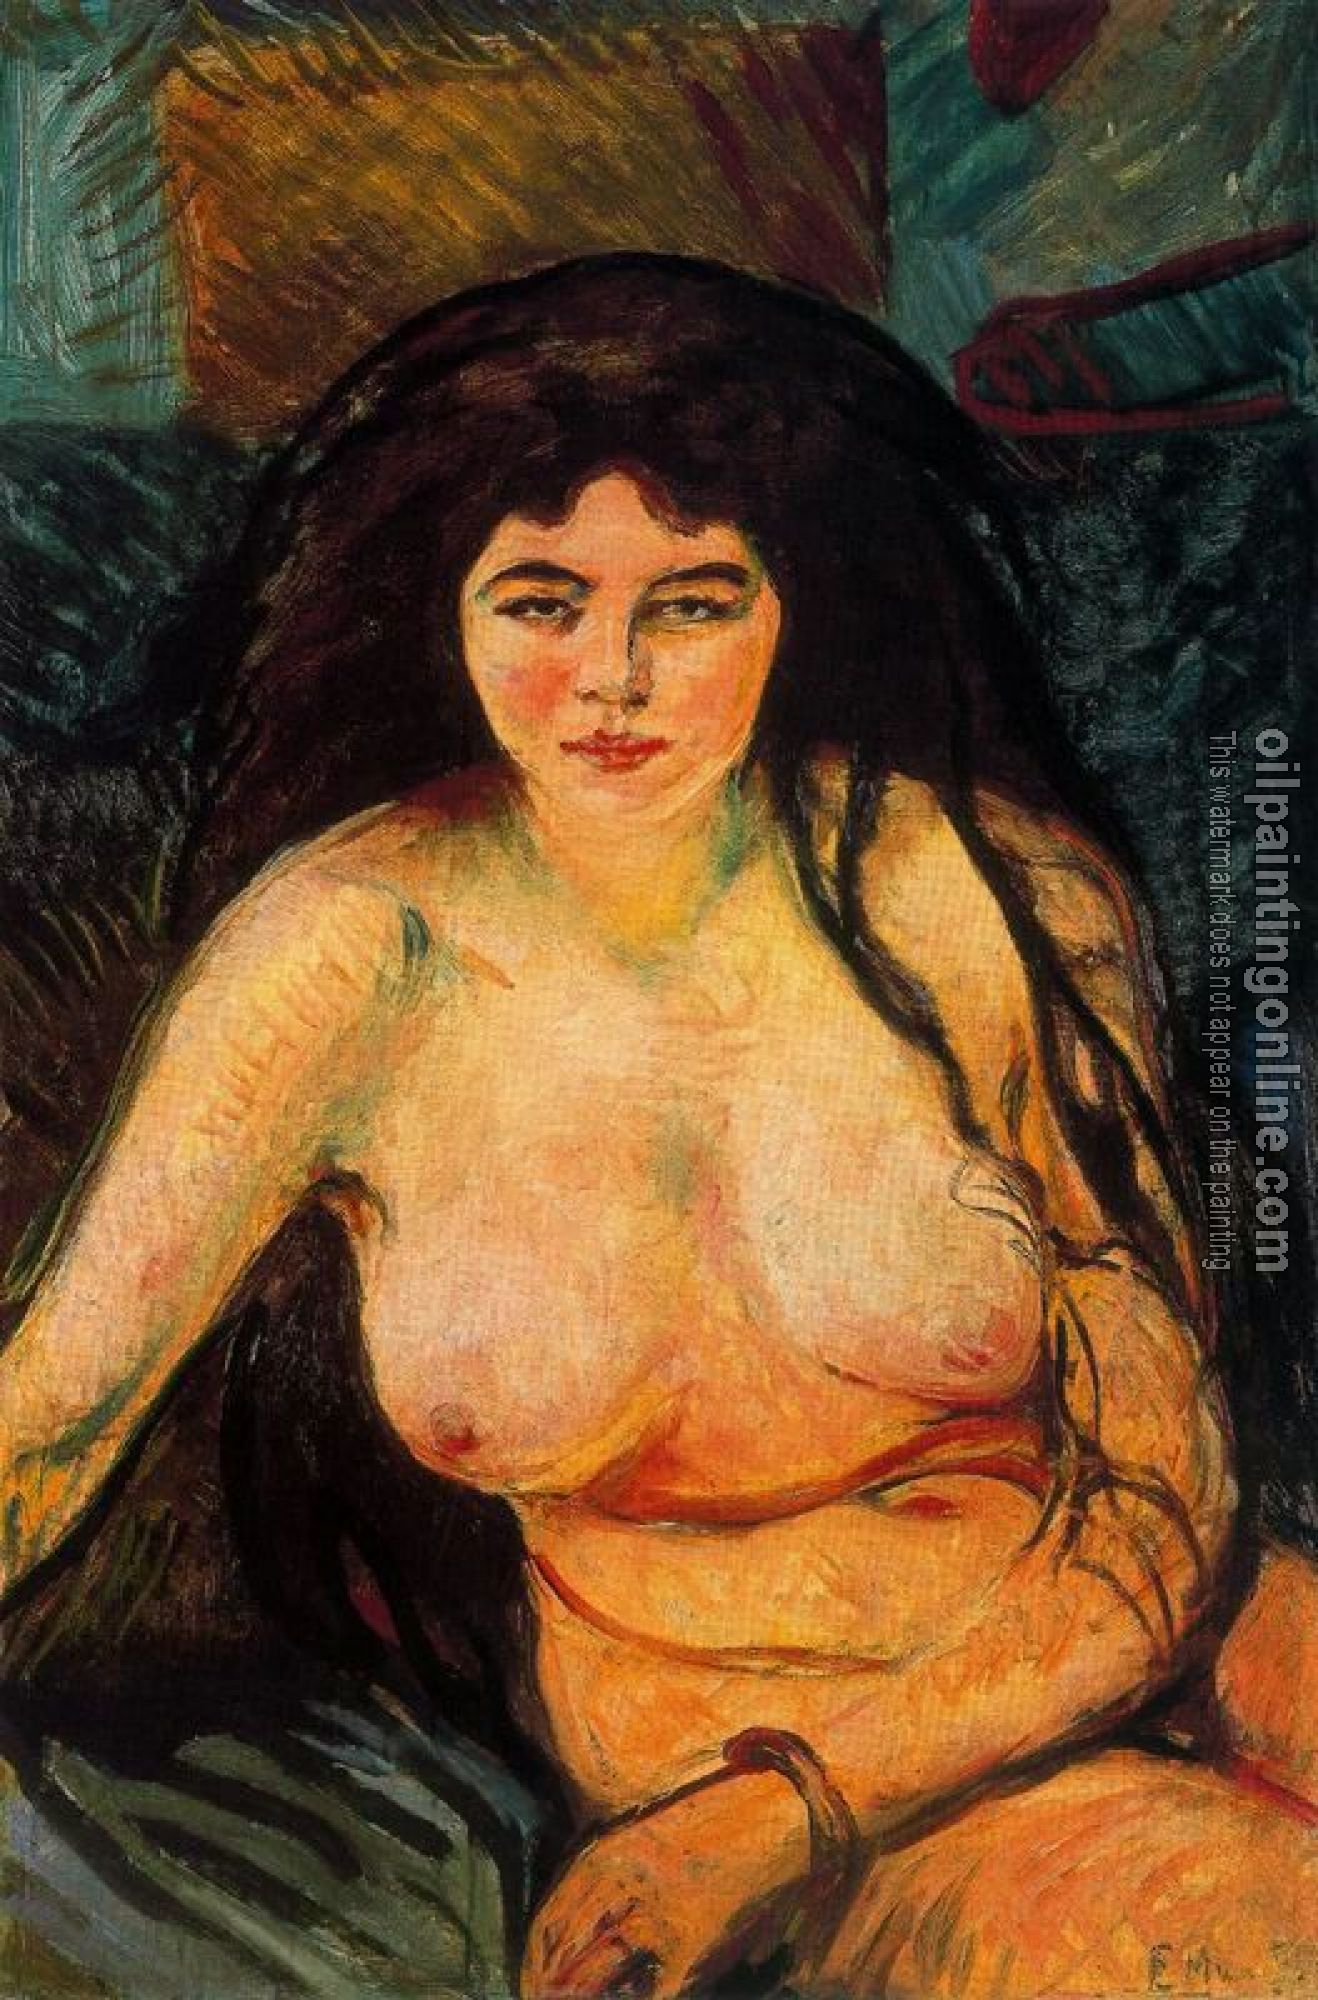 Munch, Edvard - The Beast